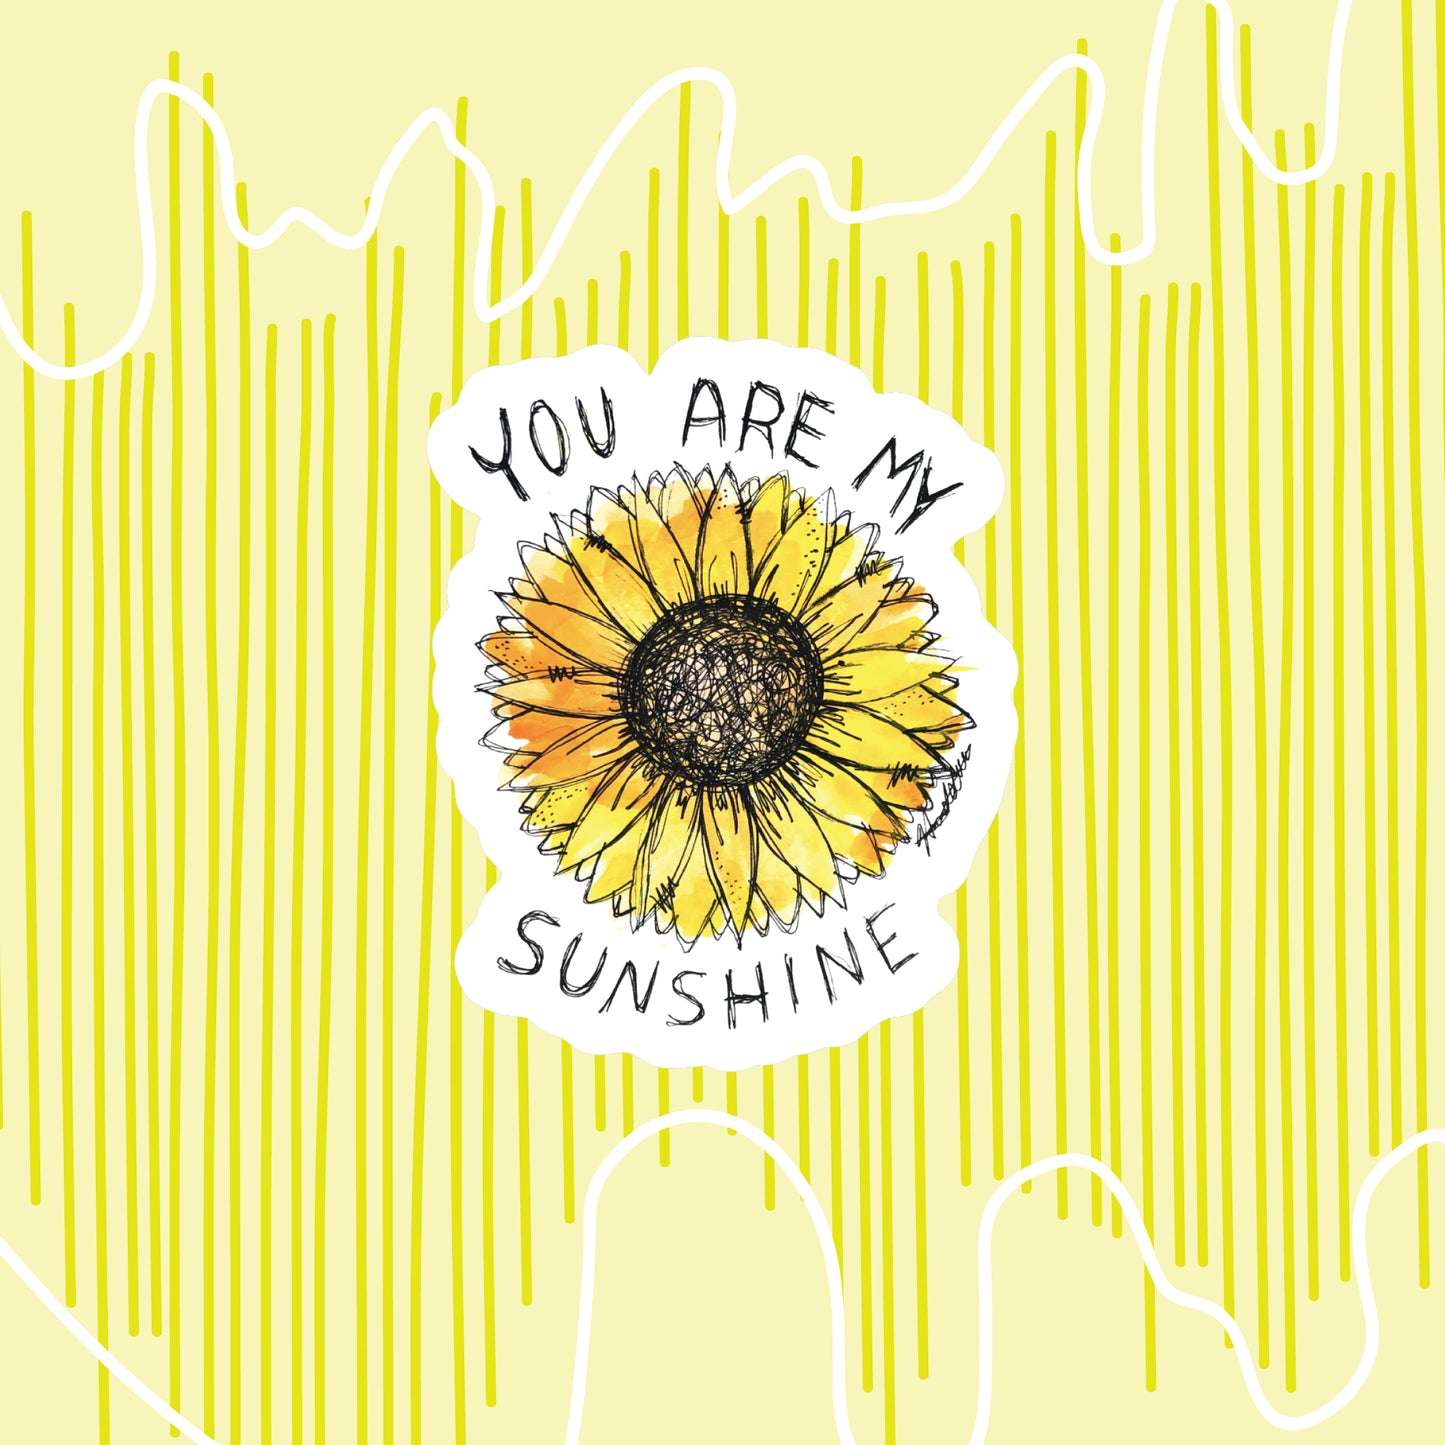 "You are my Sunshine" Sticker